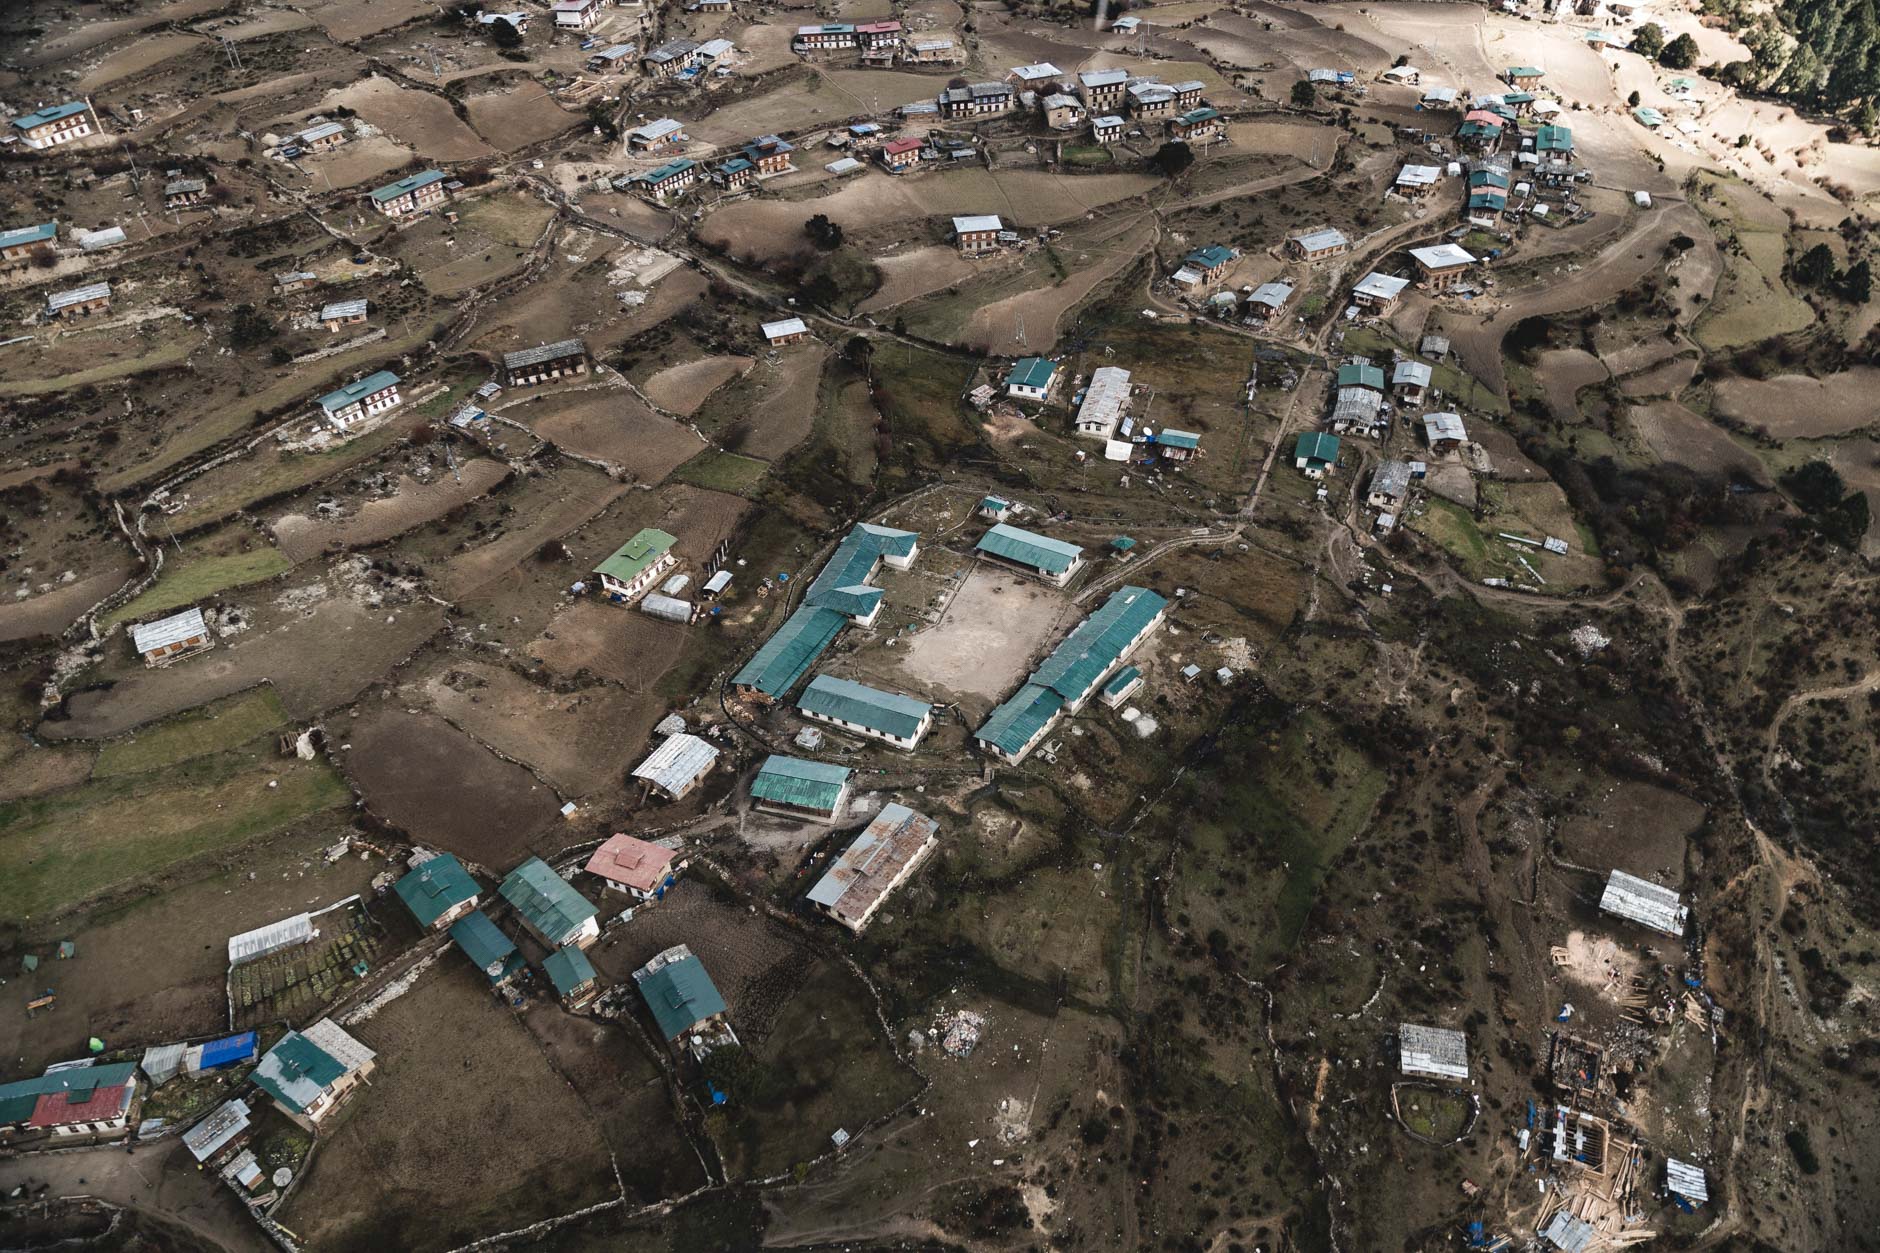 An aerial view of the village Merak, Bhutan